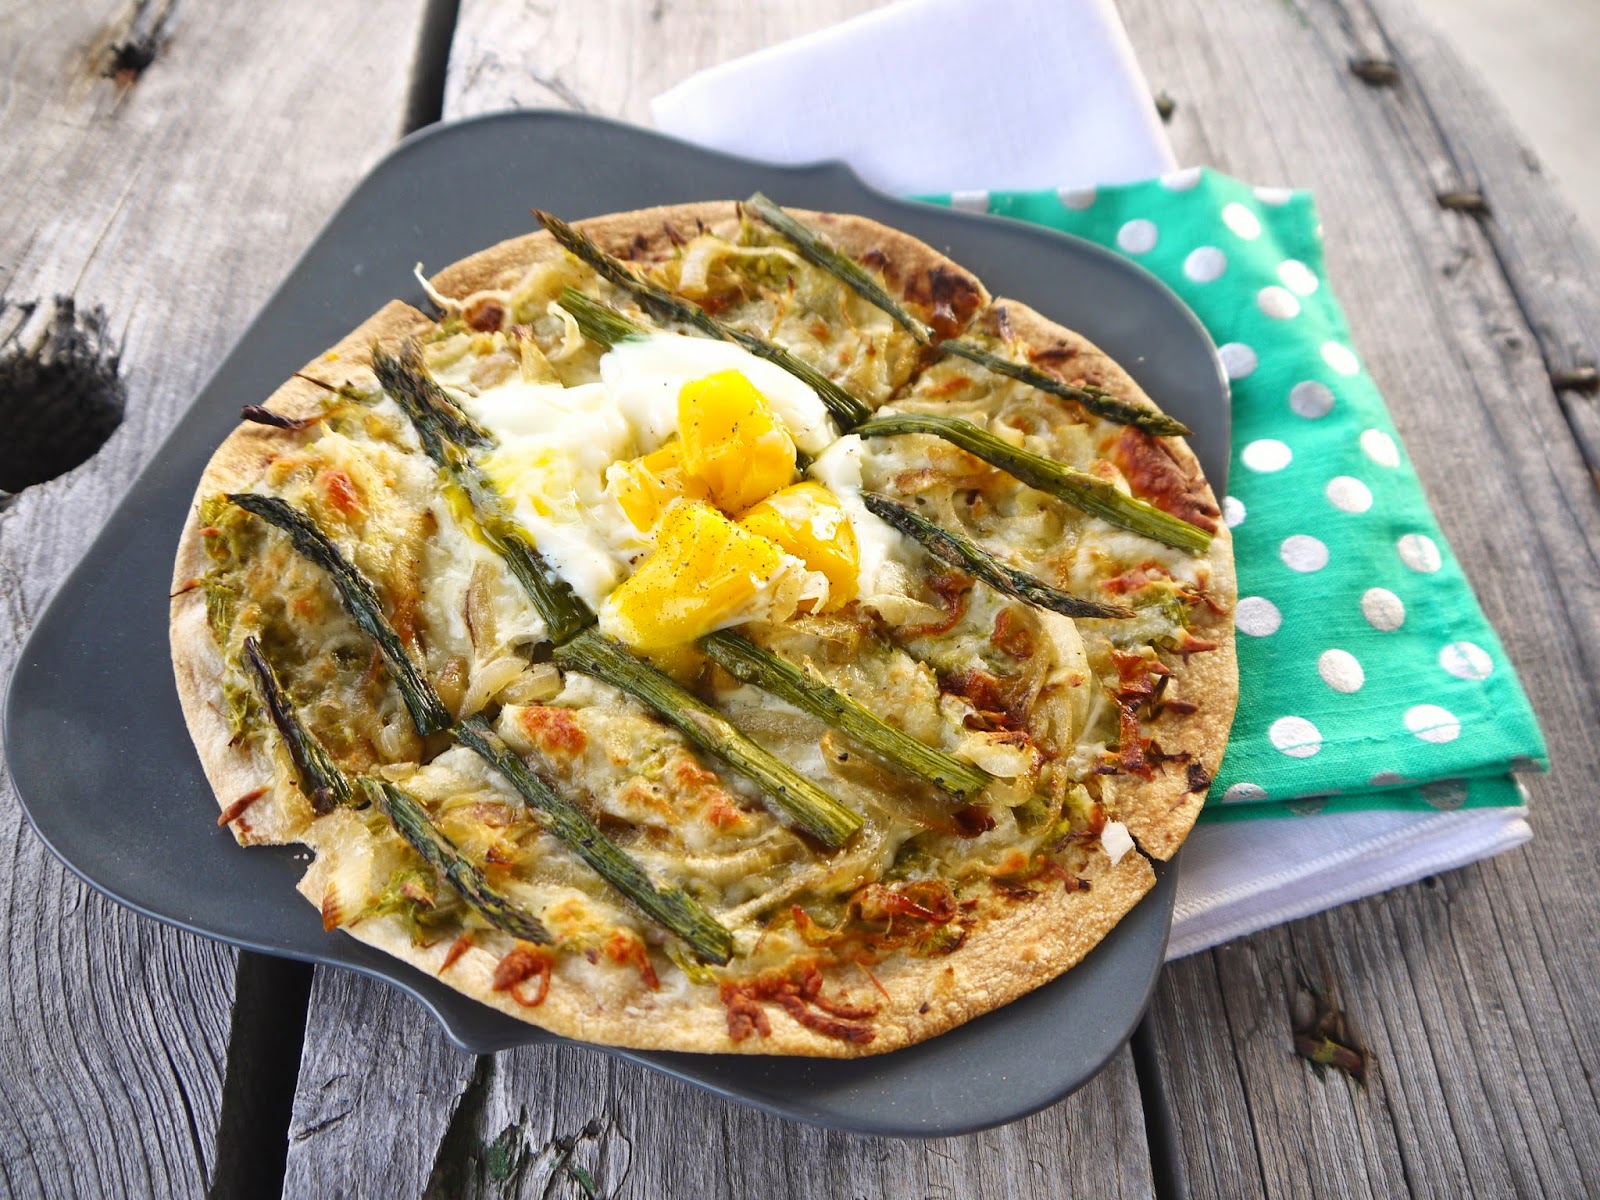 http://www.eat8020.com/2014/03/80-asparagus-caramelized-onion-and-egg.html